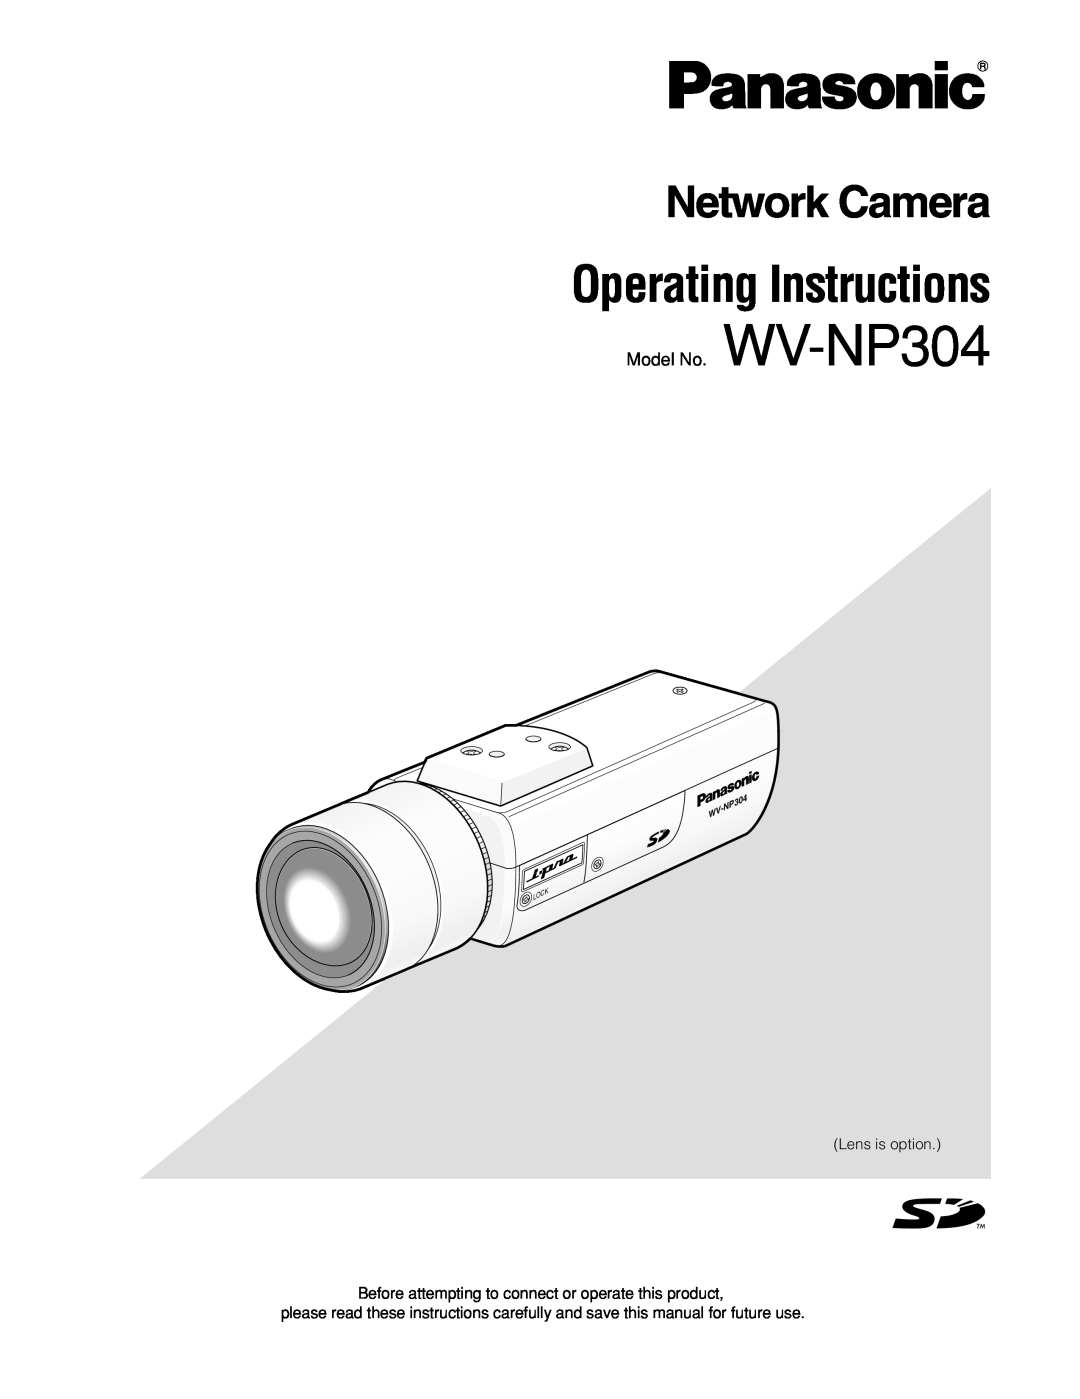 Panasonic manual Installation Guide, Network Camera, Model No. WV-NP304 